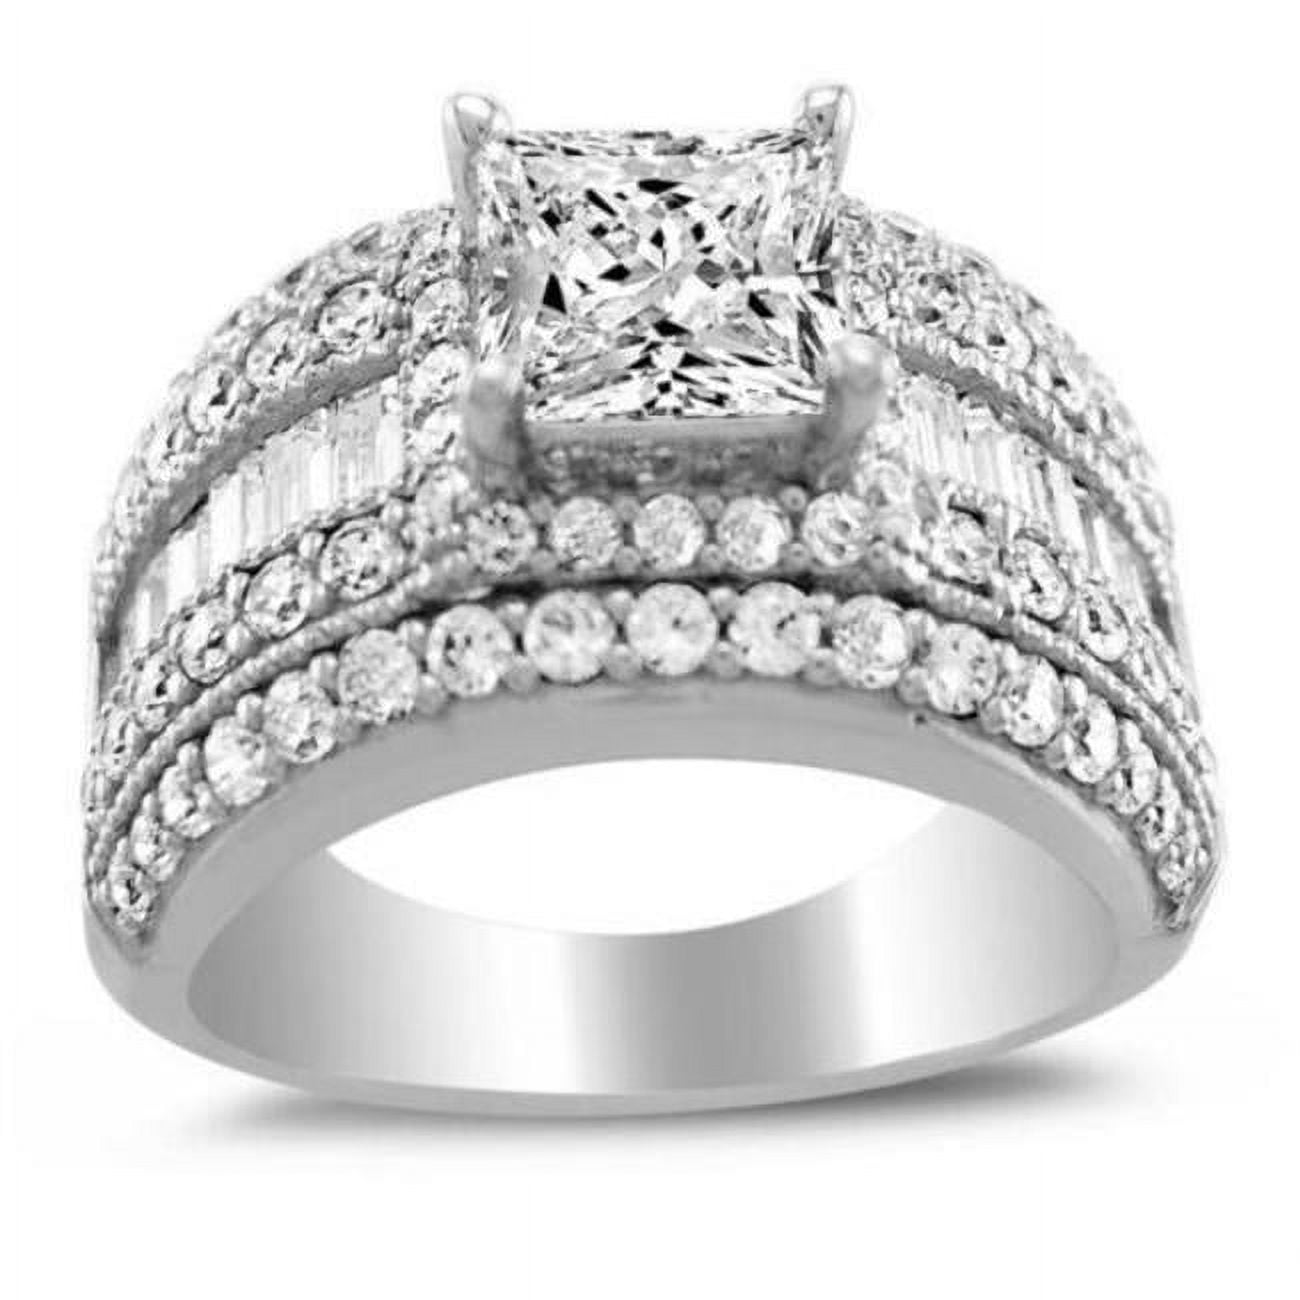 OS0065-RG-sz8 14K White Gold 2.5CT TGW Princess-cut Diamonette Engagement Ring, Size 8 -  Precious Stars, OS0065-RG_sz8